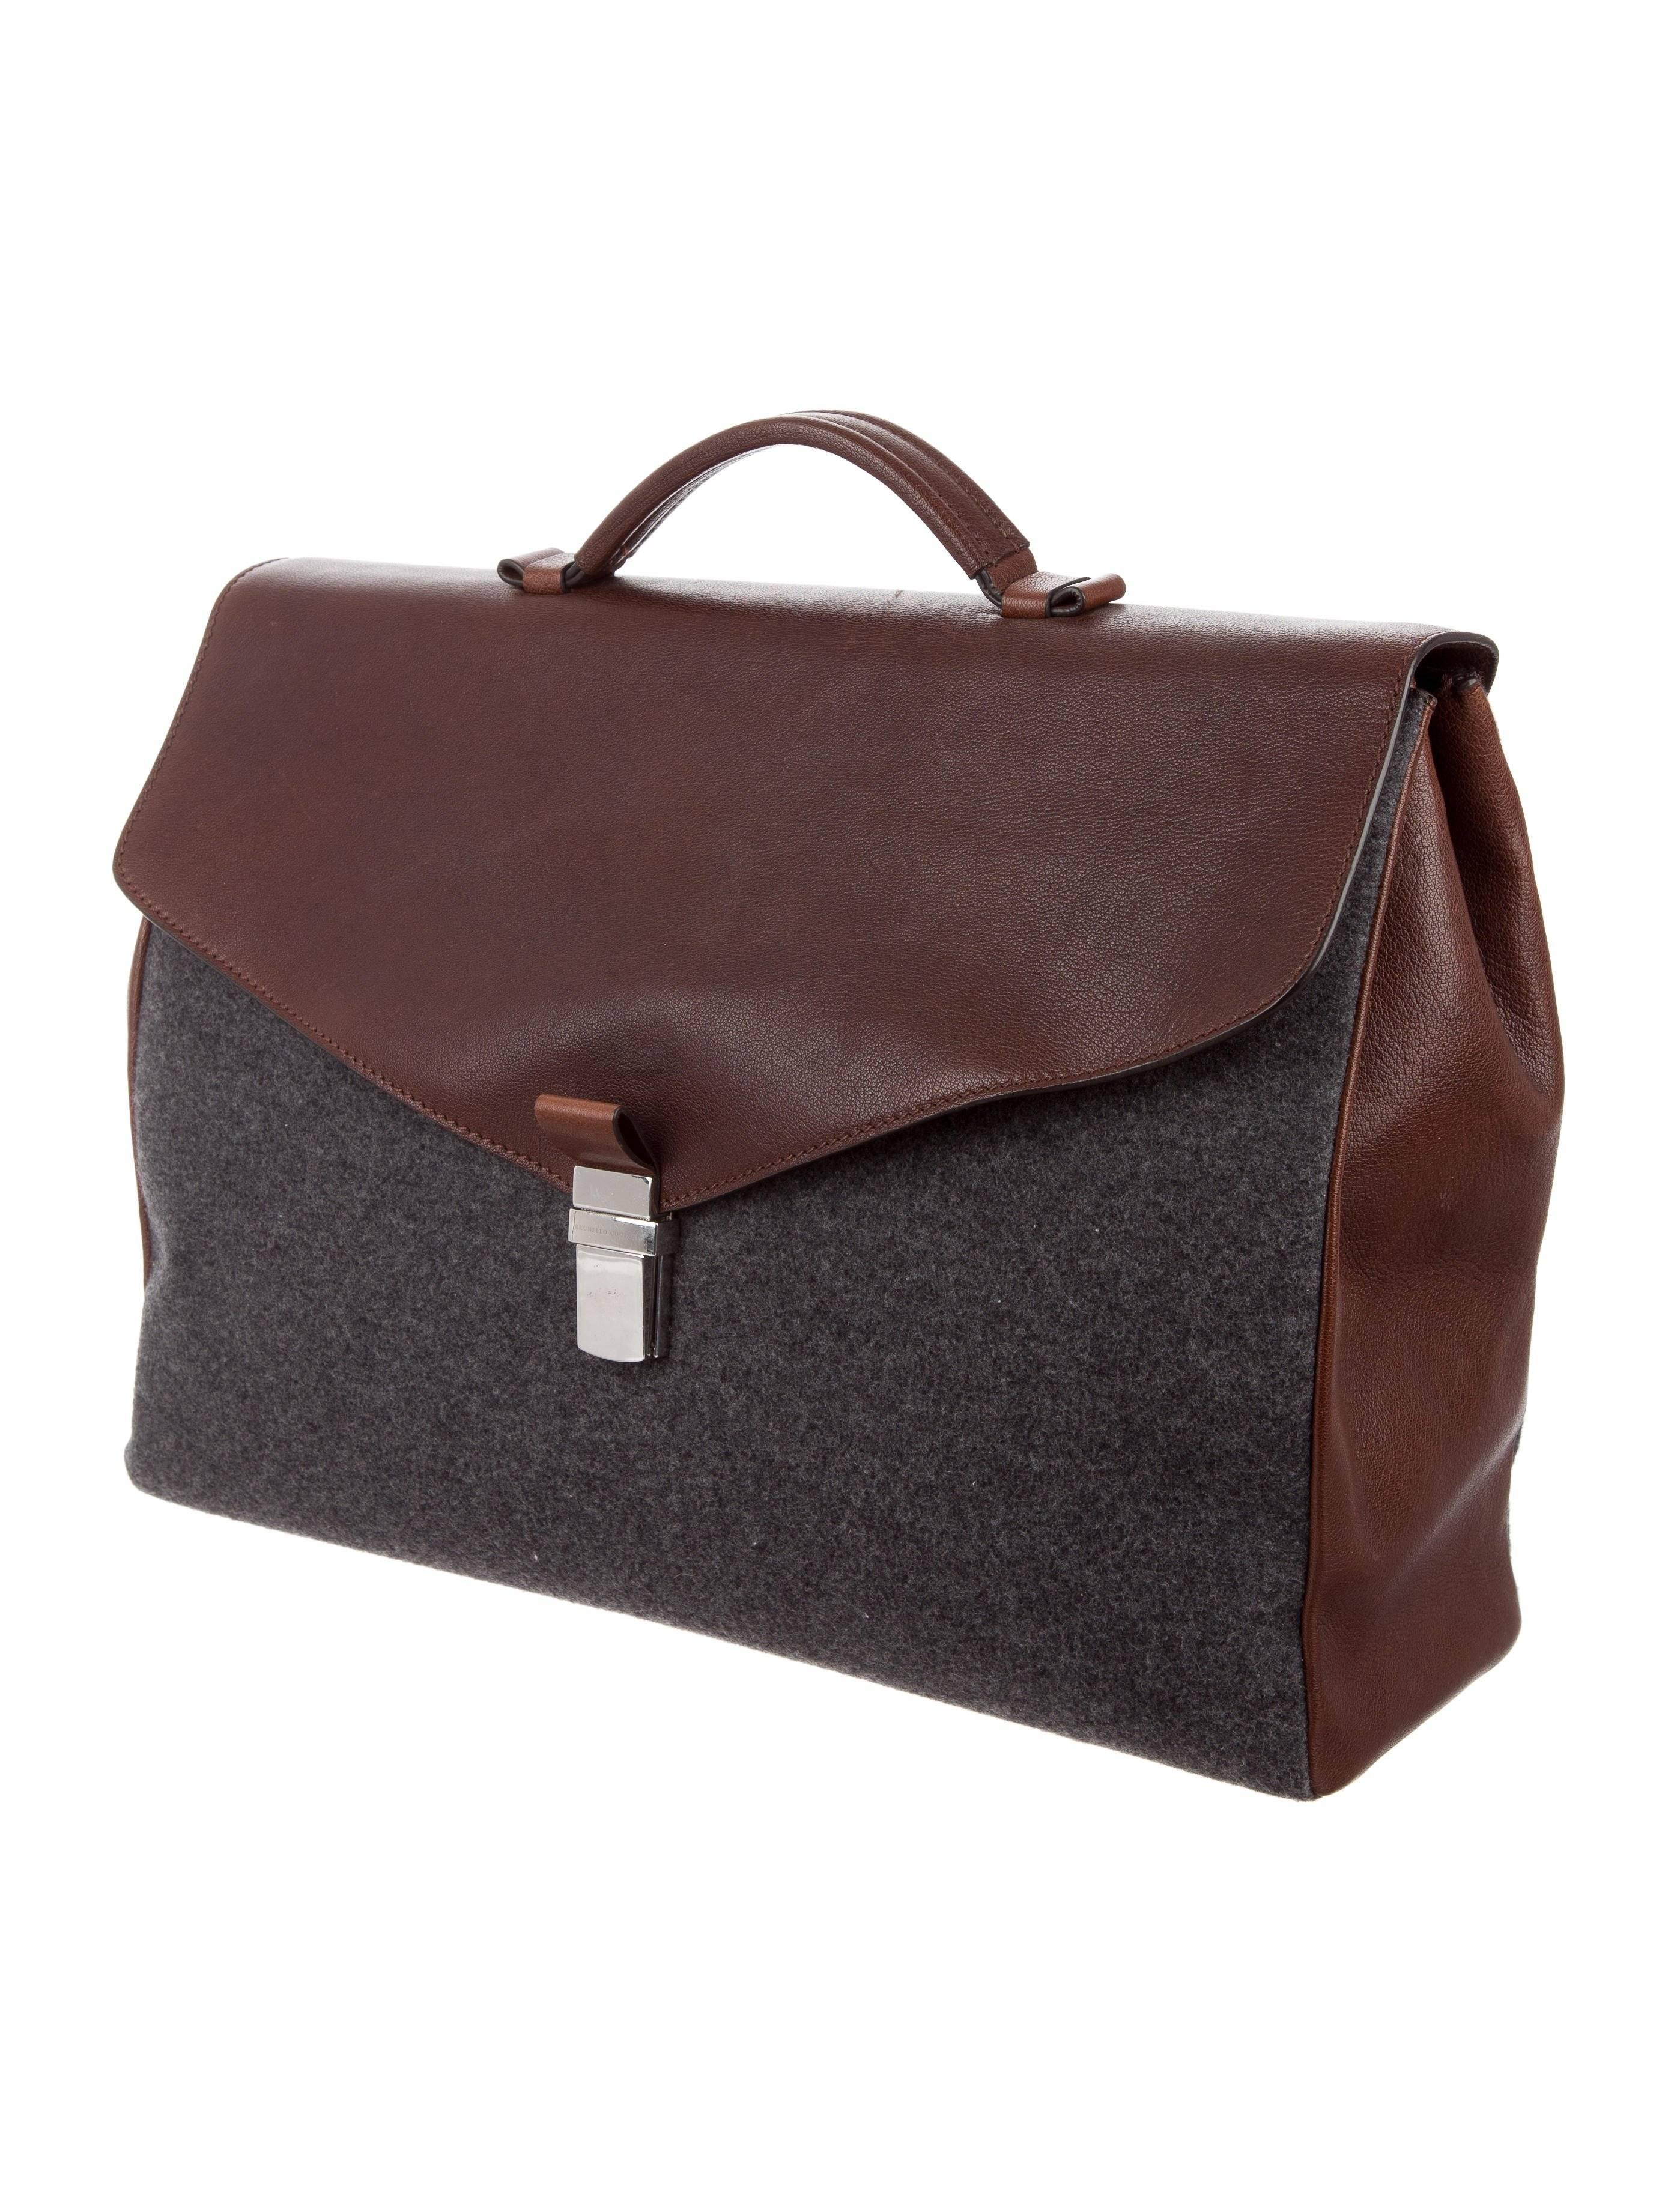 Black Brunello Cucinelli New Leather Cognac Wool Men's Travel Business Case Tote Bag